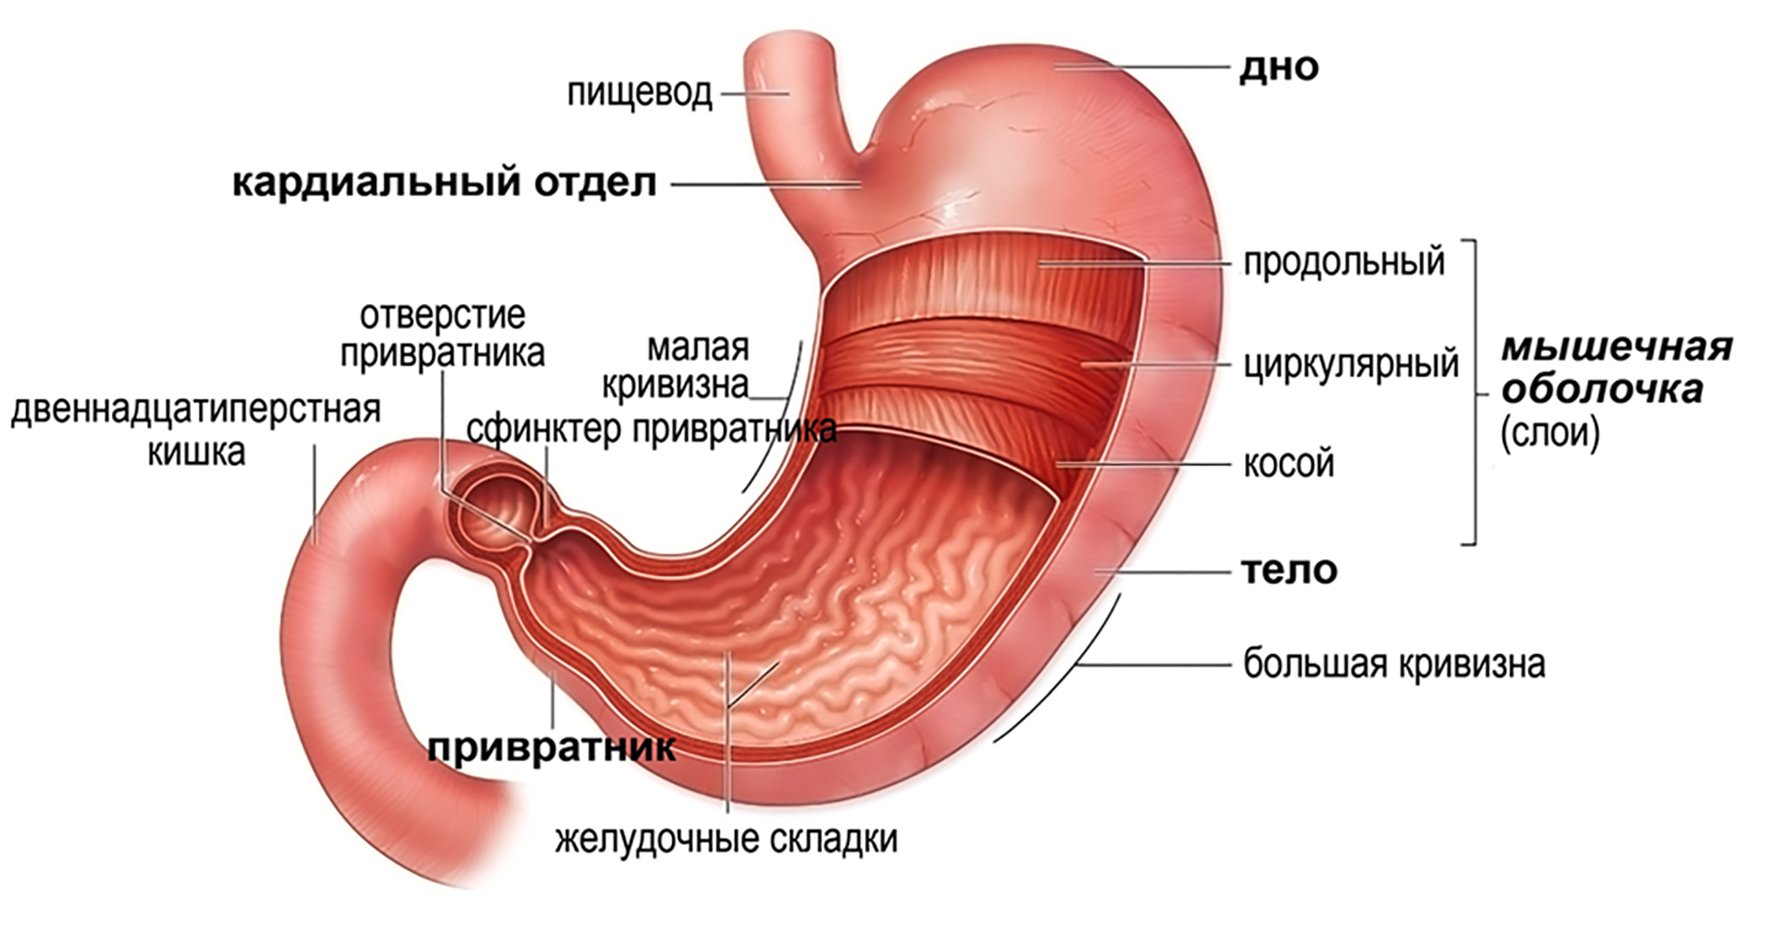 Покажи картинки желудка. Внешнее строение желудка анатомия. Желудок строение анатомия атлас. Строение желудка человека привратник. Привратник желудка анатомия.